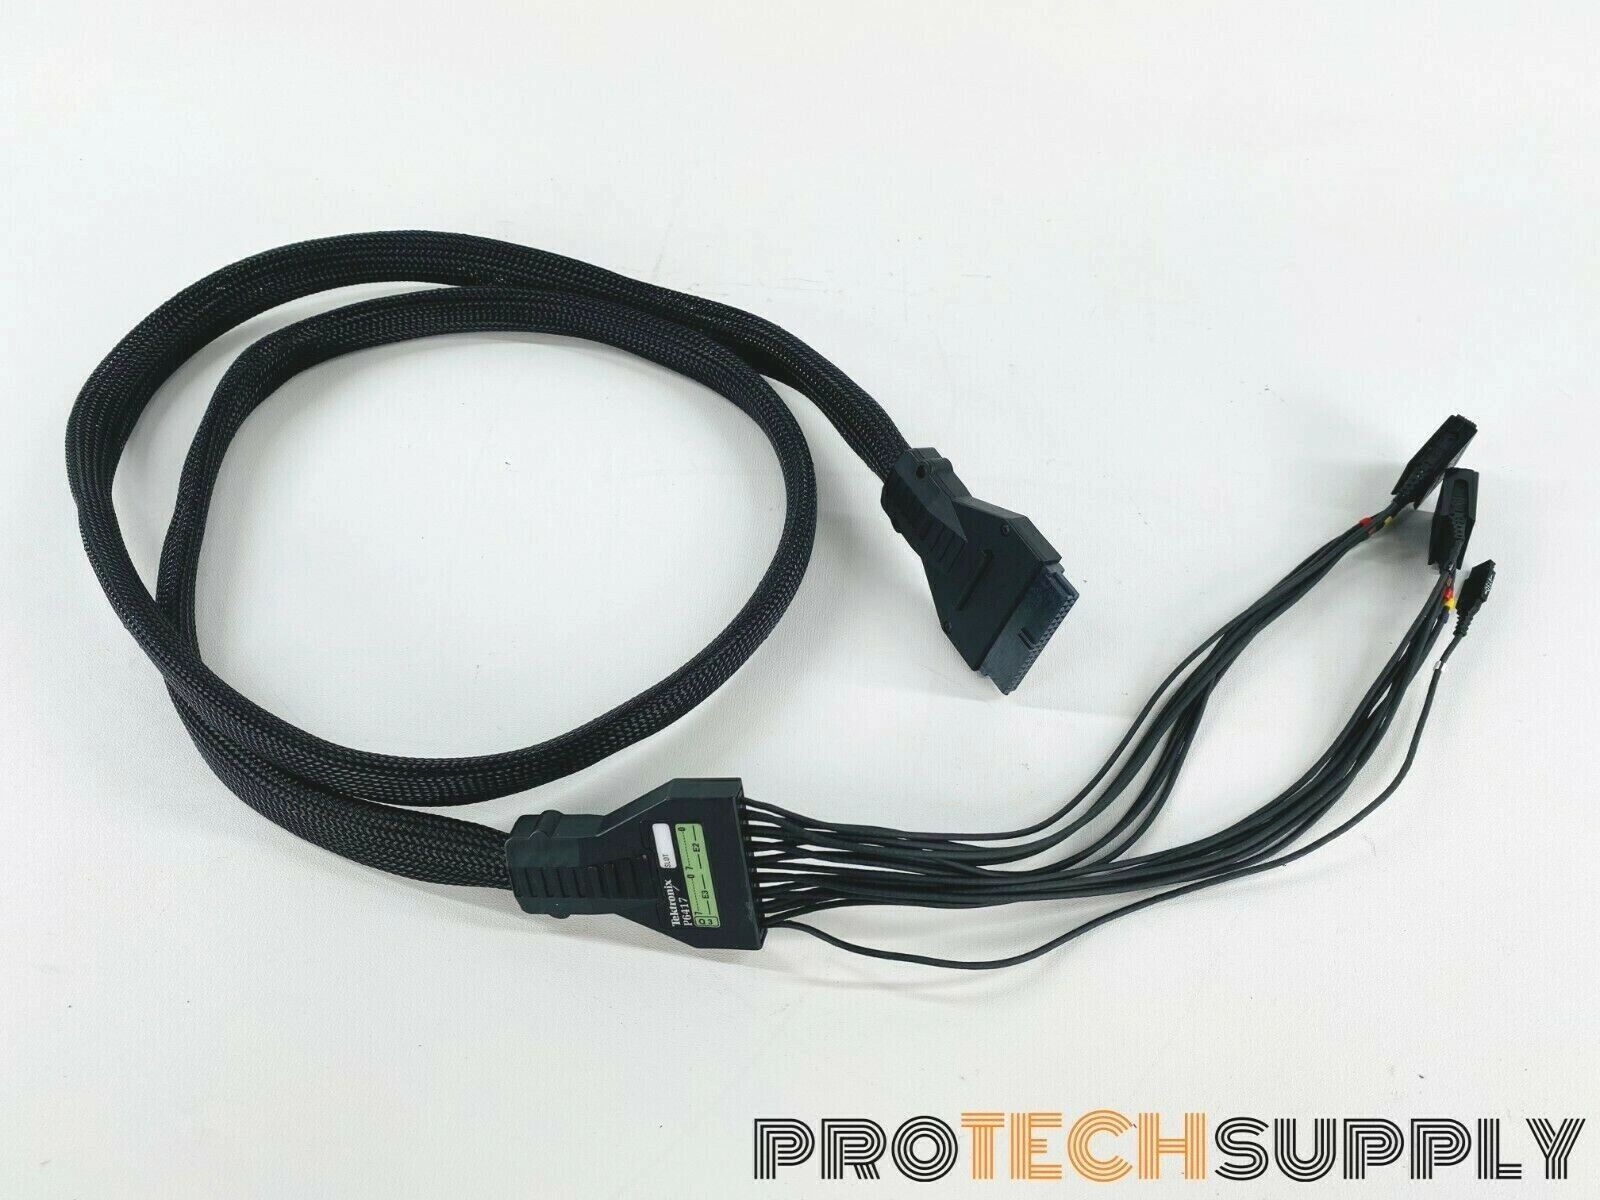 Tektronix P6417 Logic Analyzer Probe Cable with WA